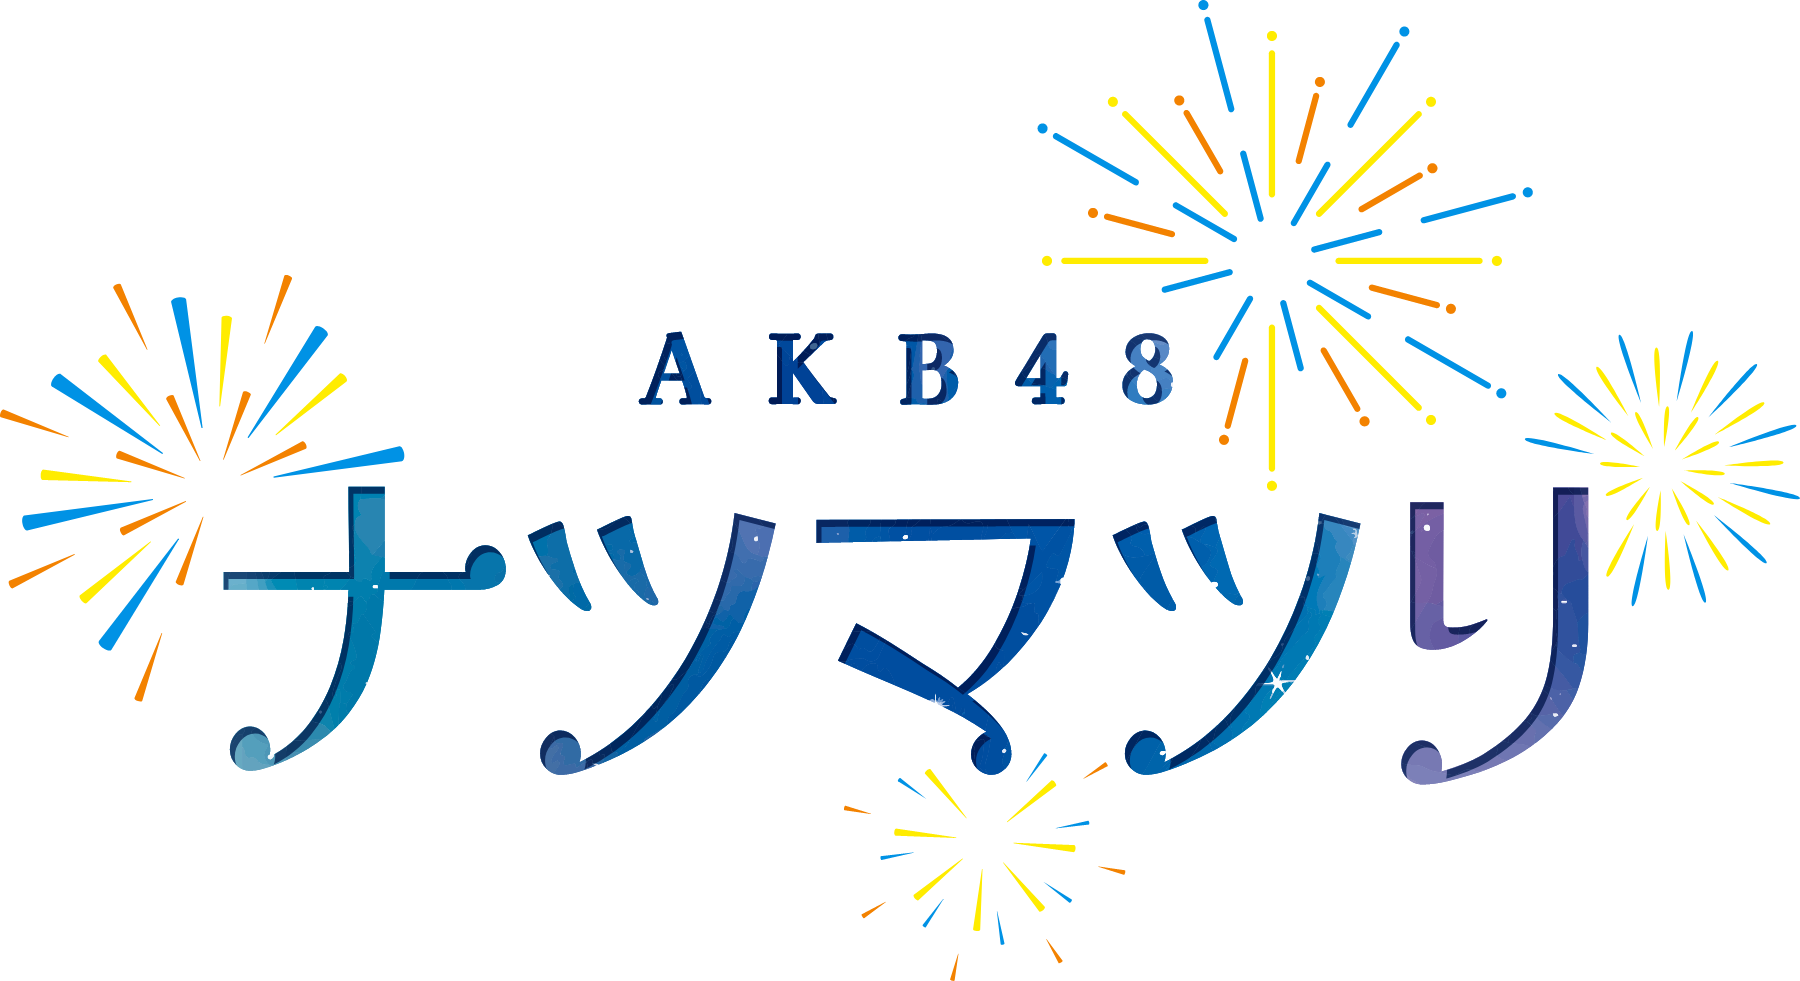 AKB48 ナツマツリ